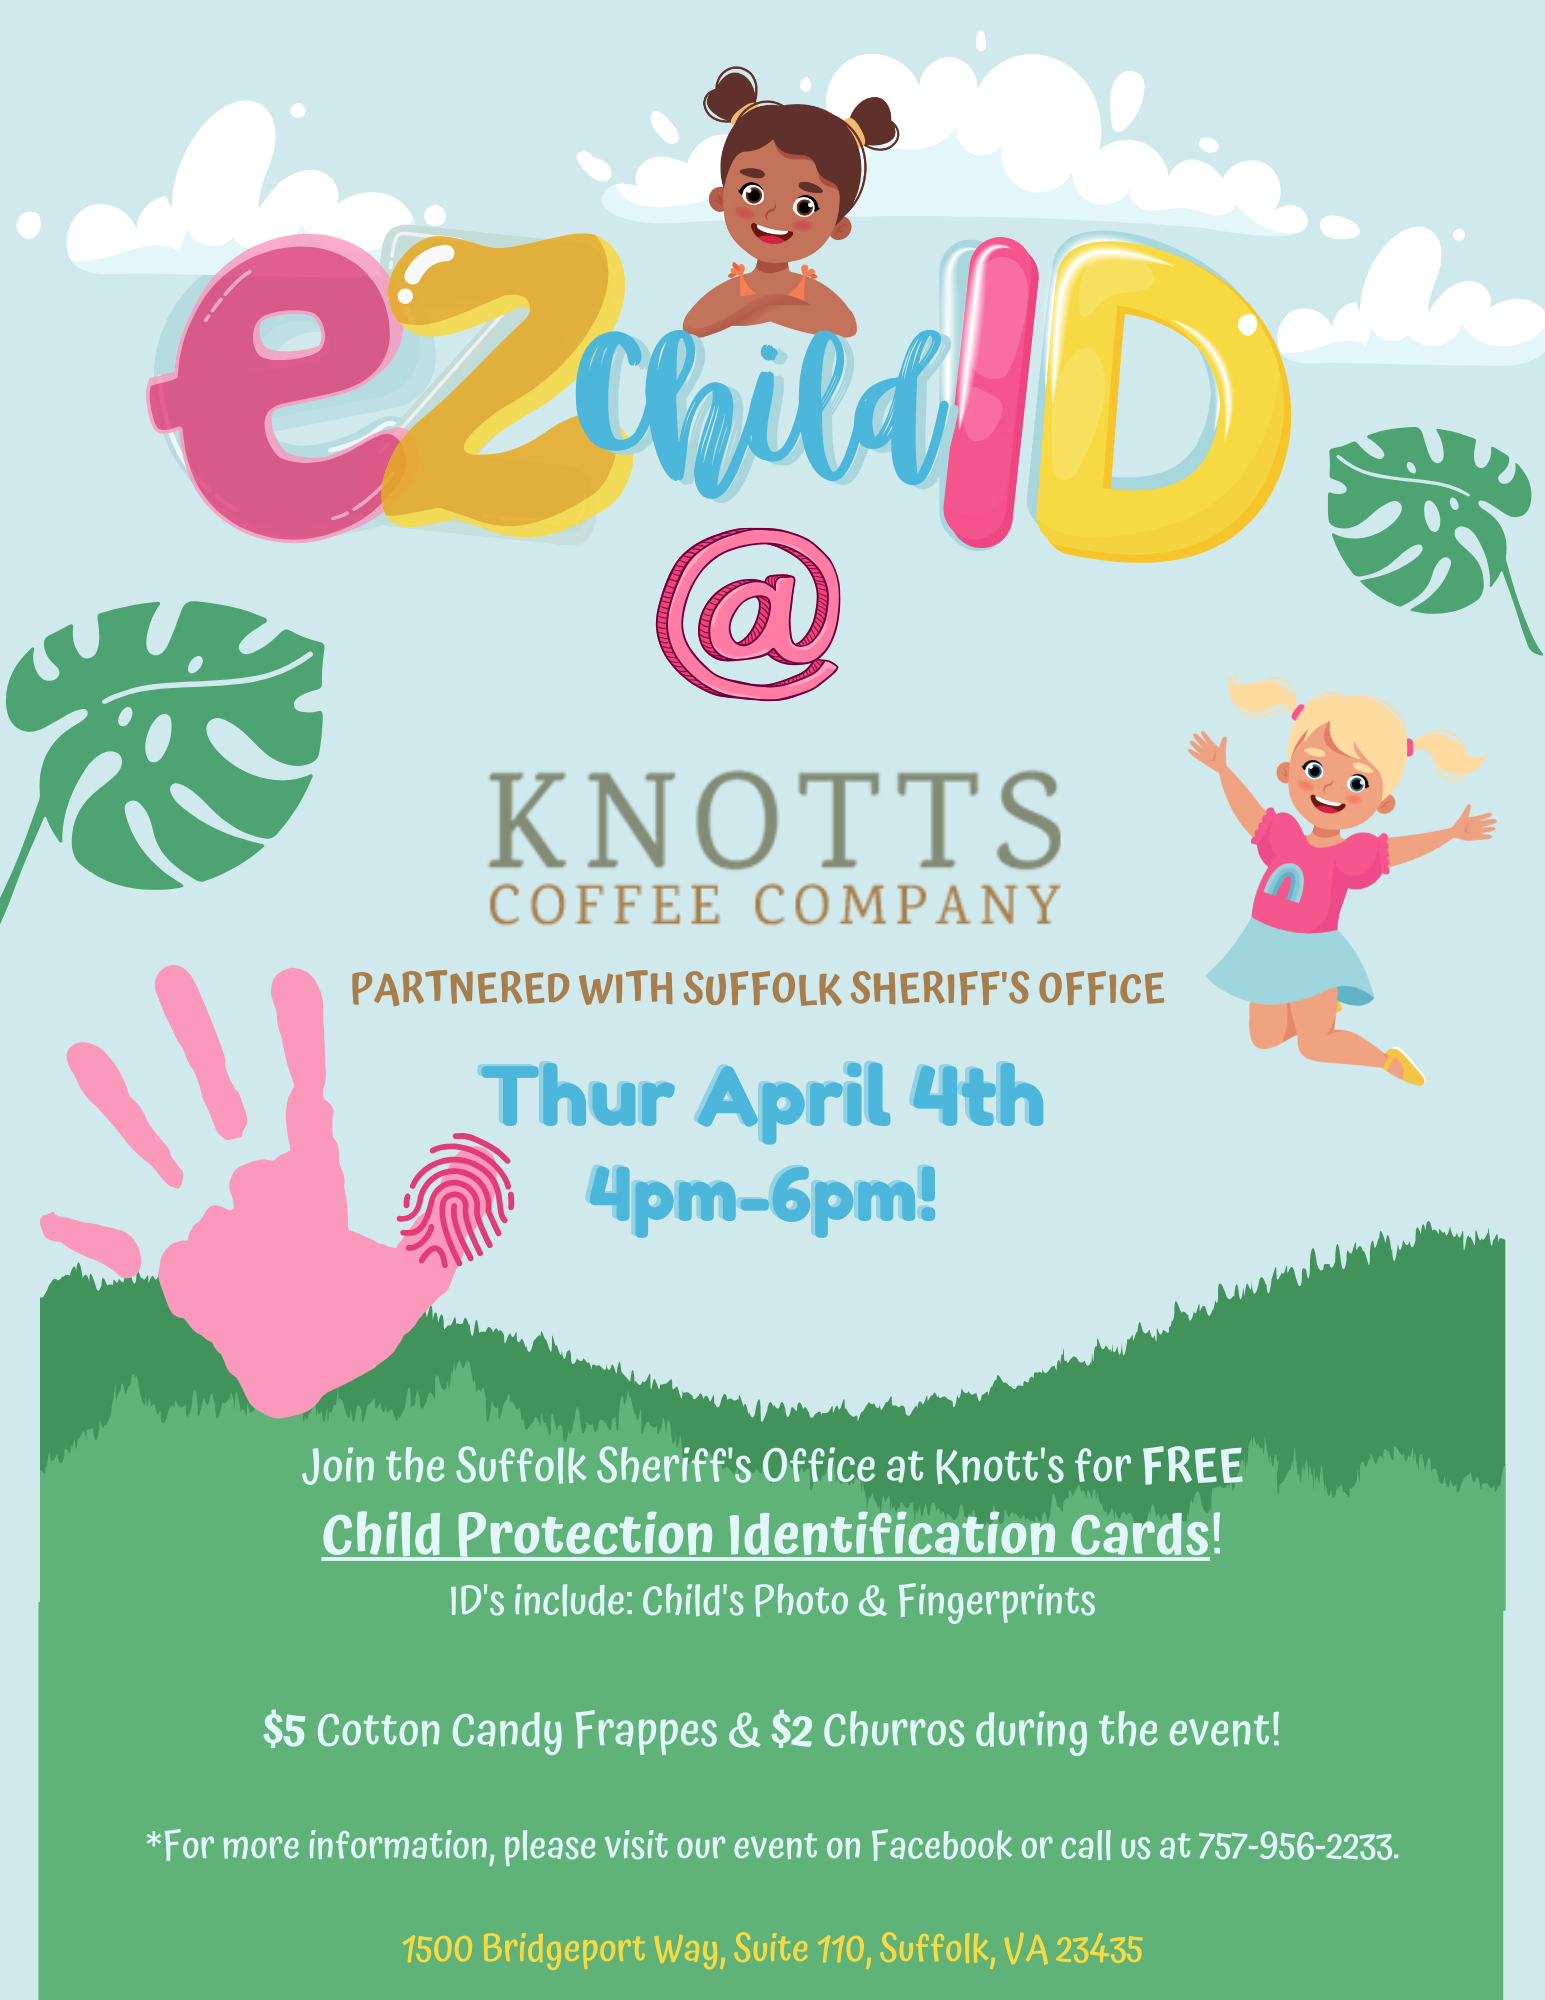 EZ Child ID Night at Knotts!